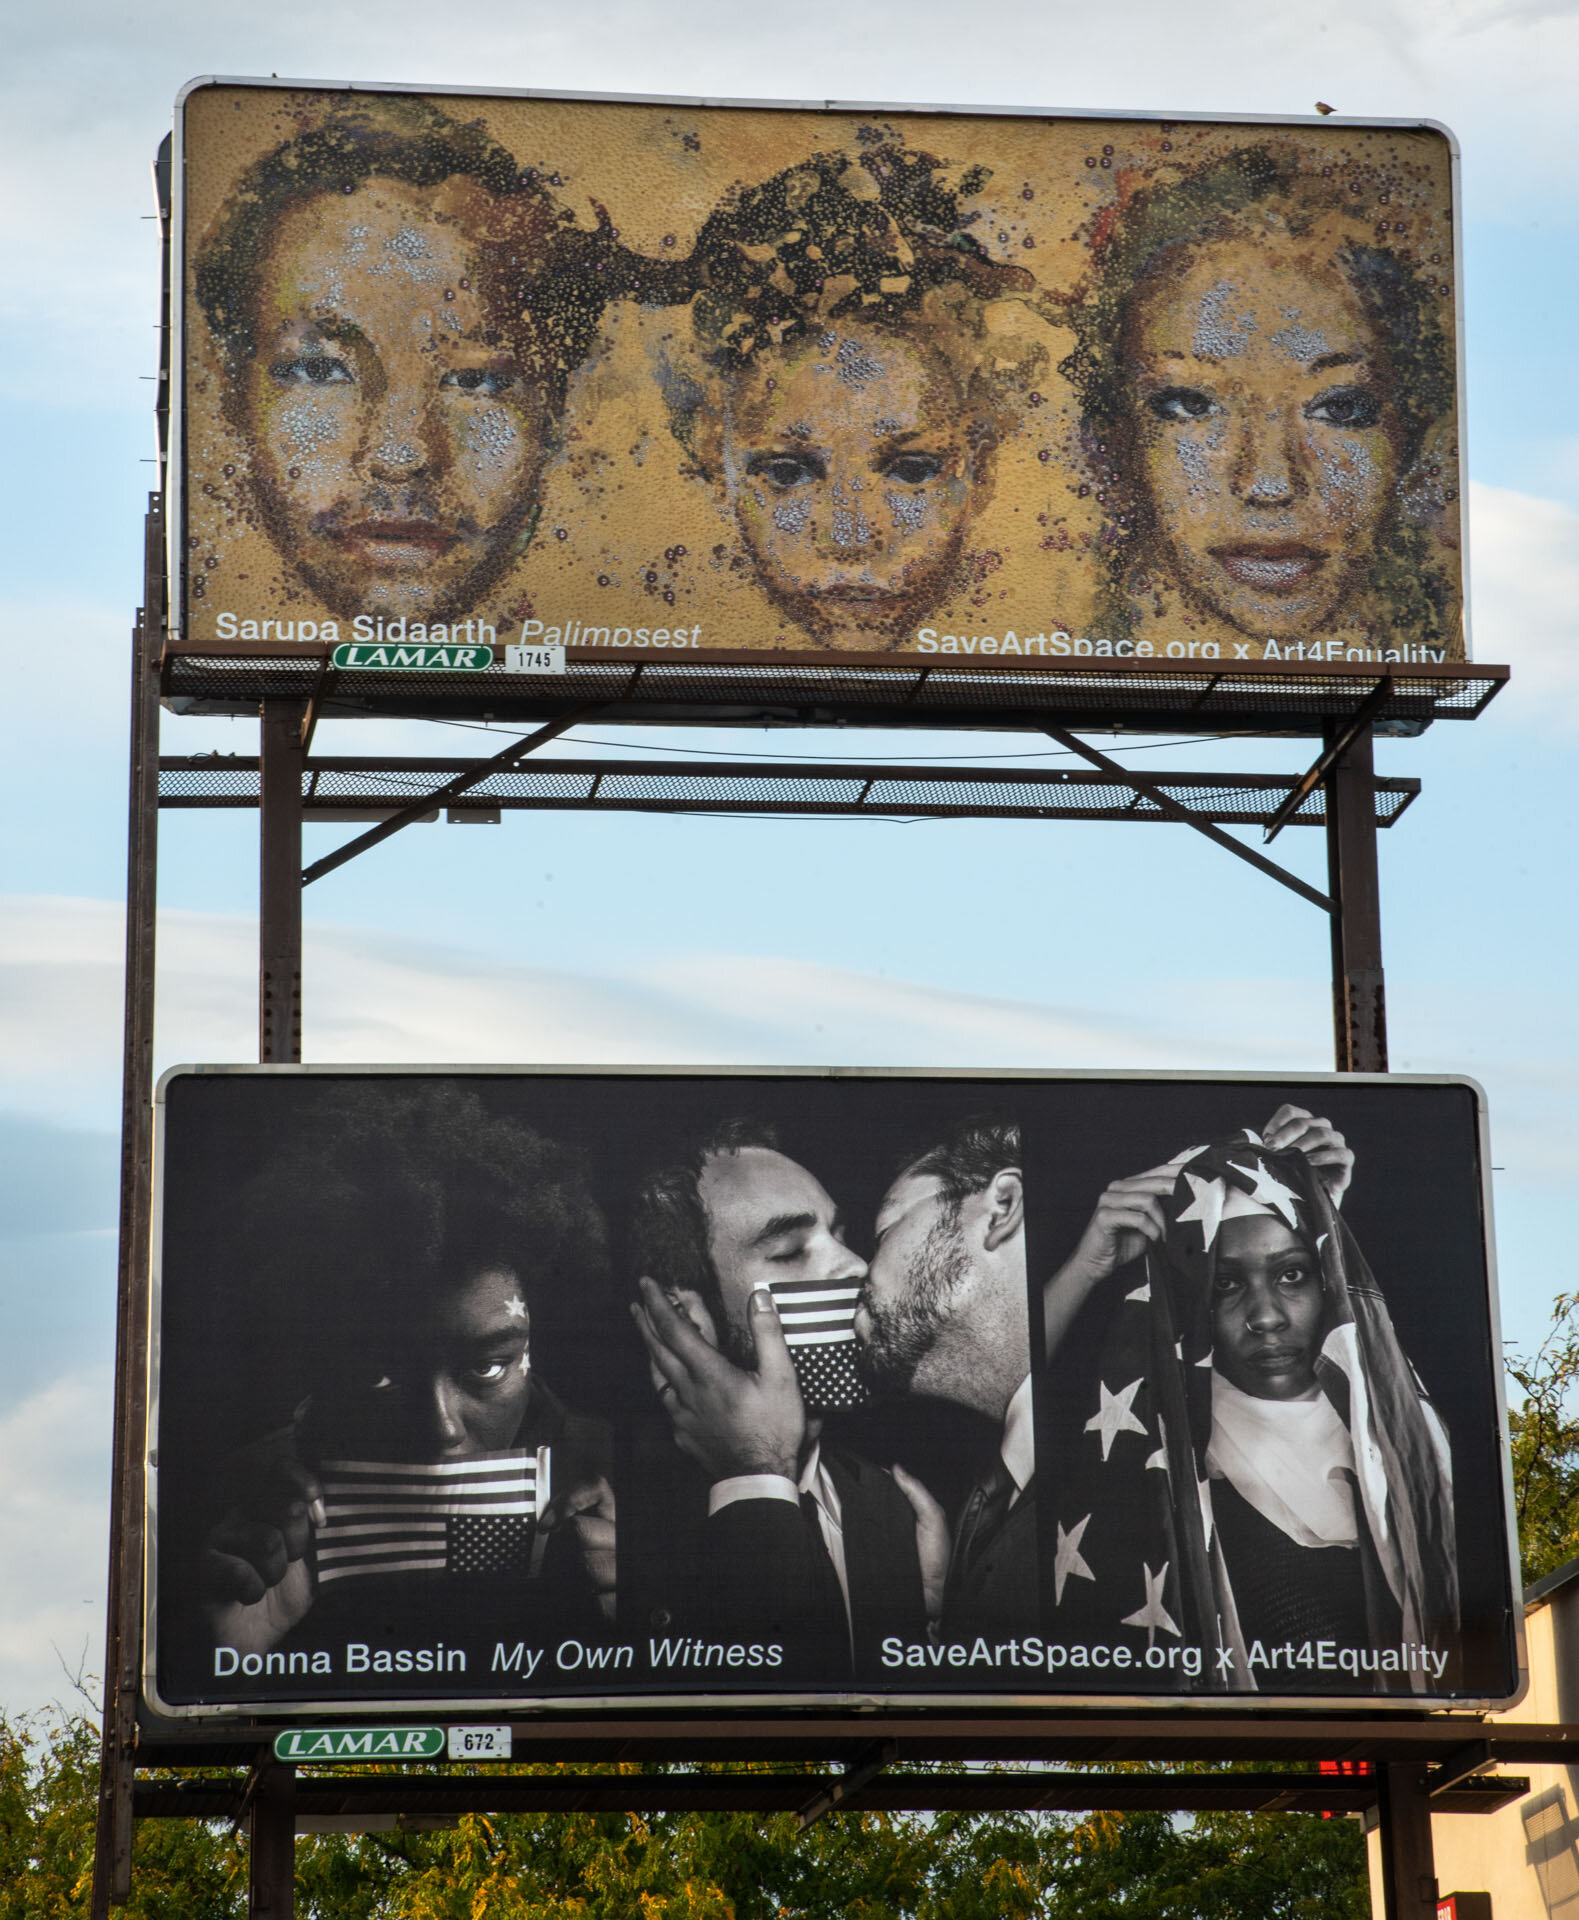 Artist Donna Bassin & Sarupa Sidaarth - SaveArtSpace x Art4Equality x The Untitled Space Public Art Billboard 1.jpg